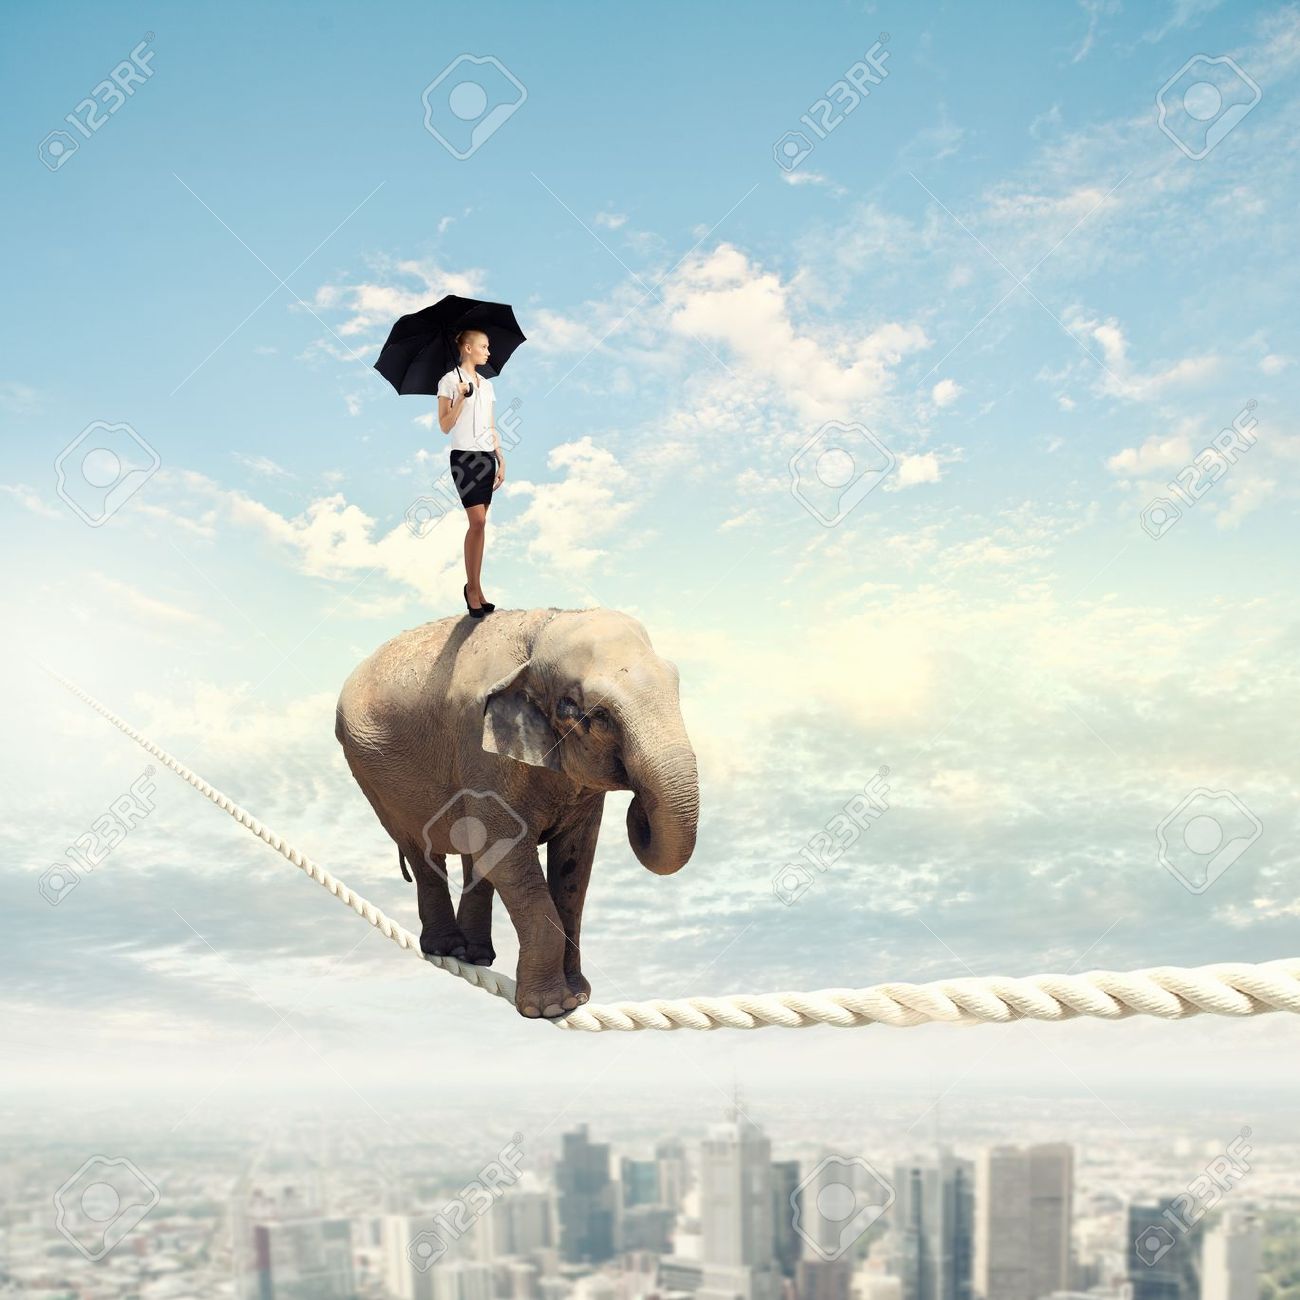 Man On Elephant Funny Walking Tightrope